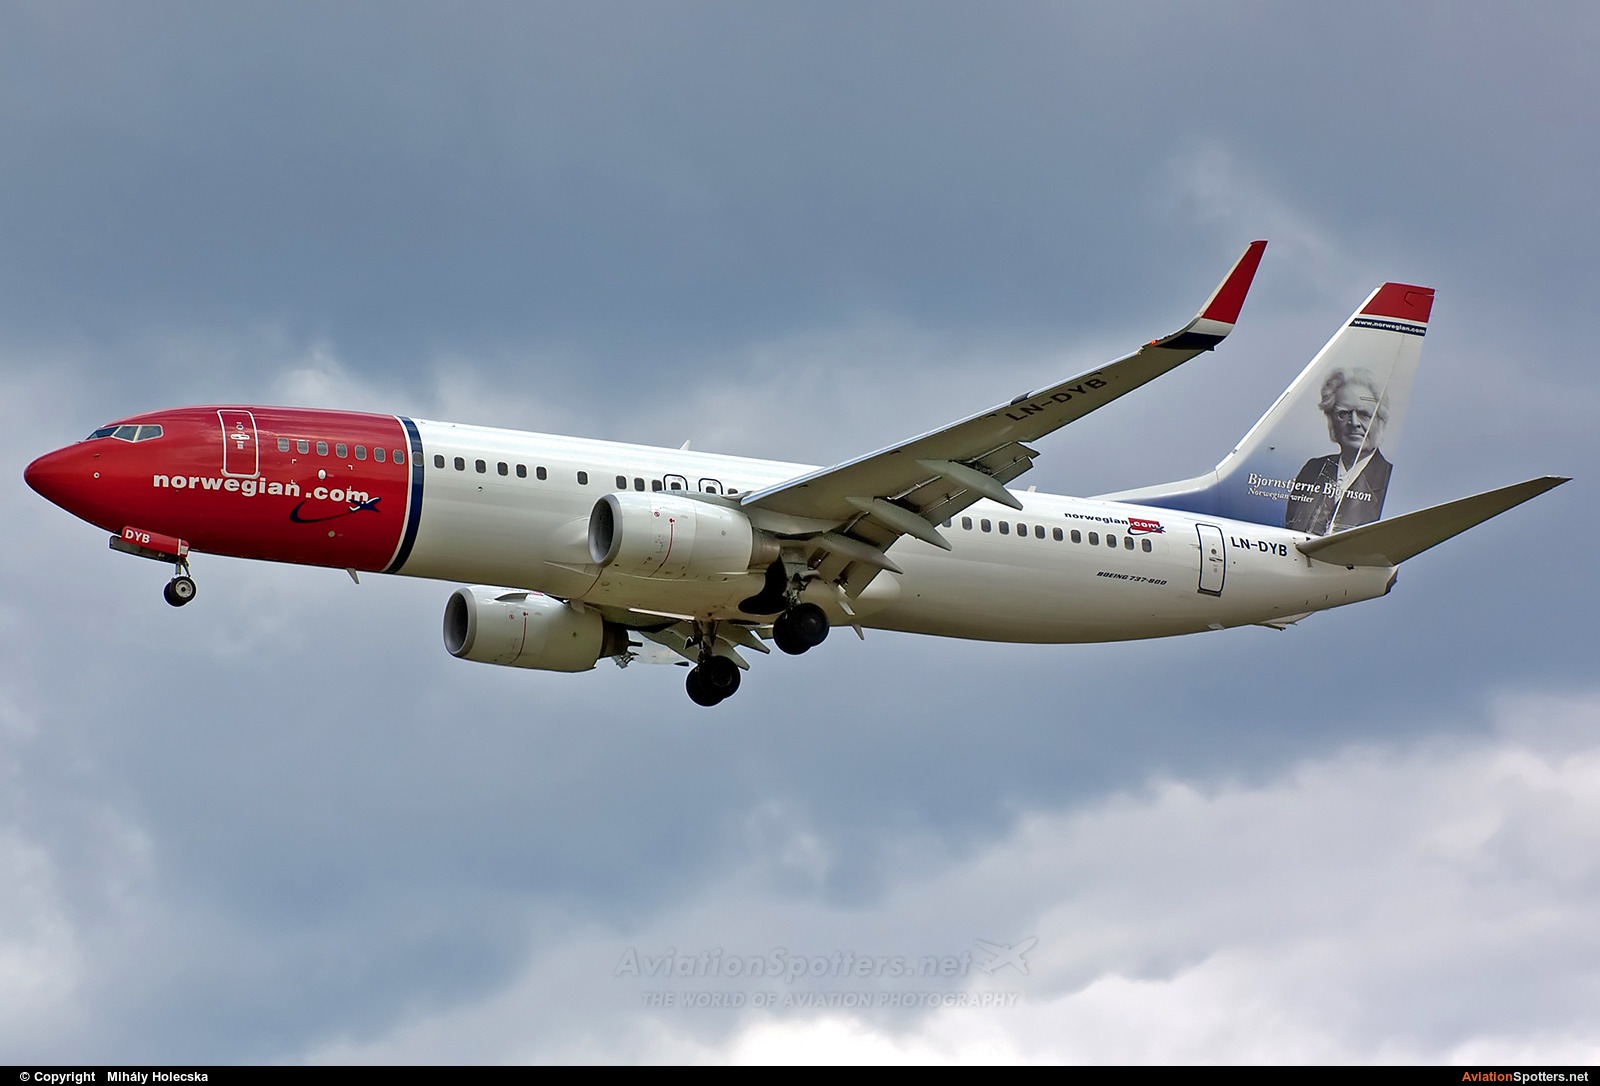 Norwegian Air Shuttle  -  737-800 BBJ  (LN-DYB) By Mihály Holecska (Misixx)